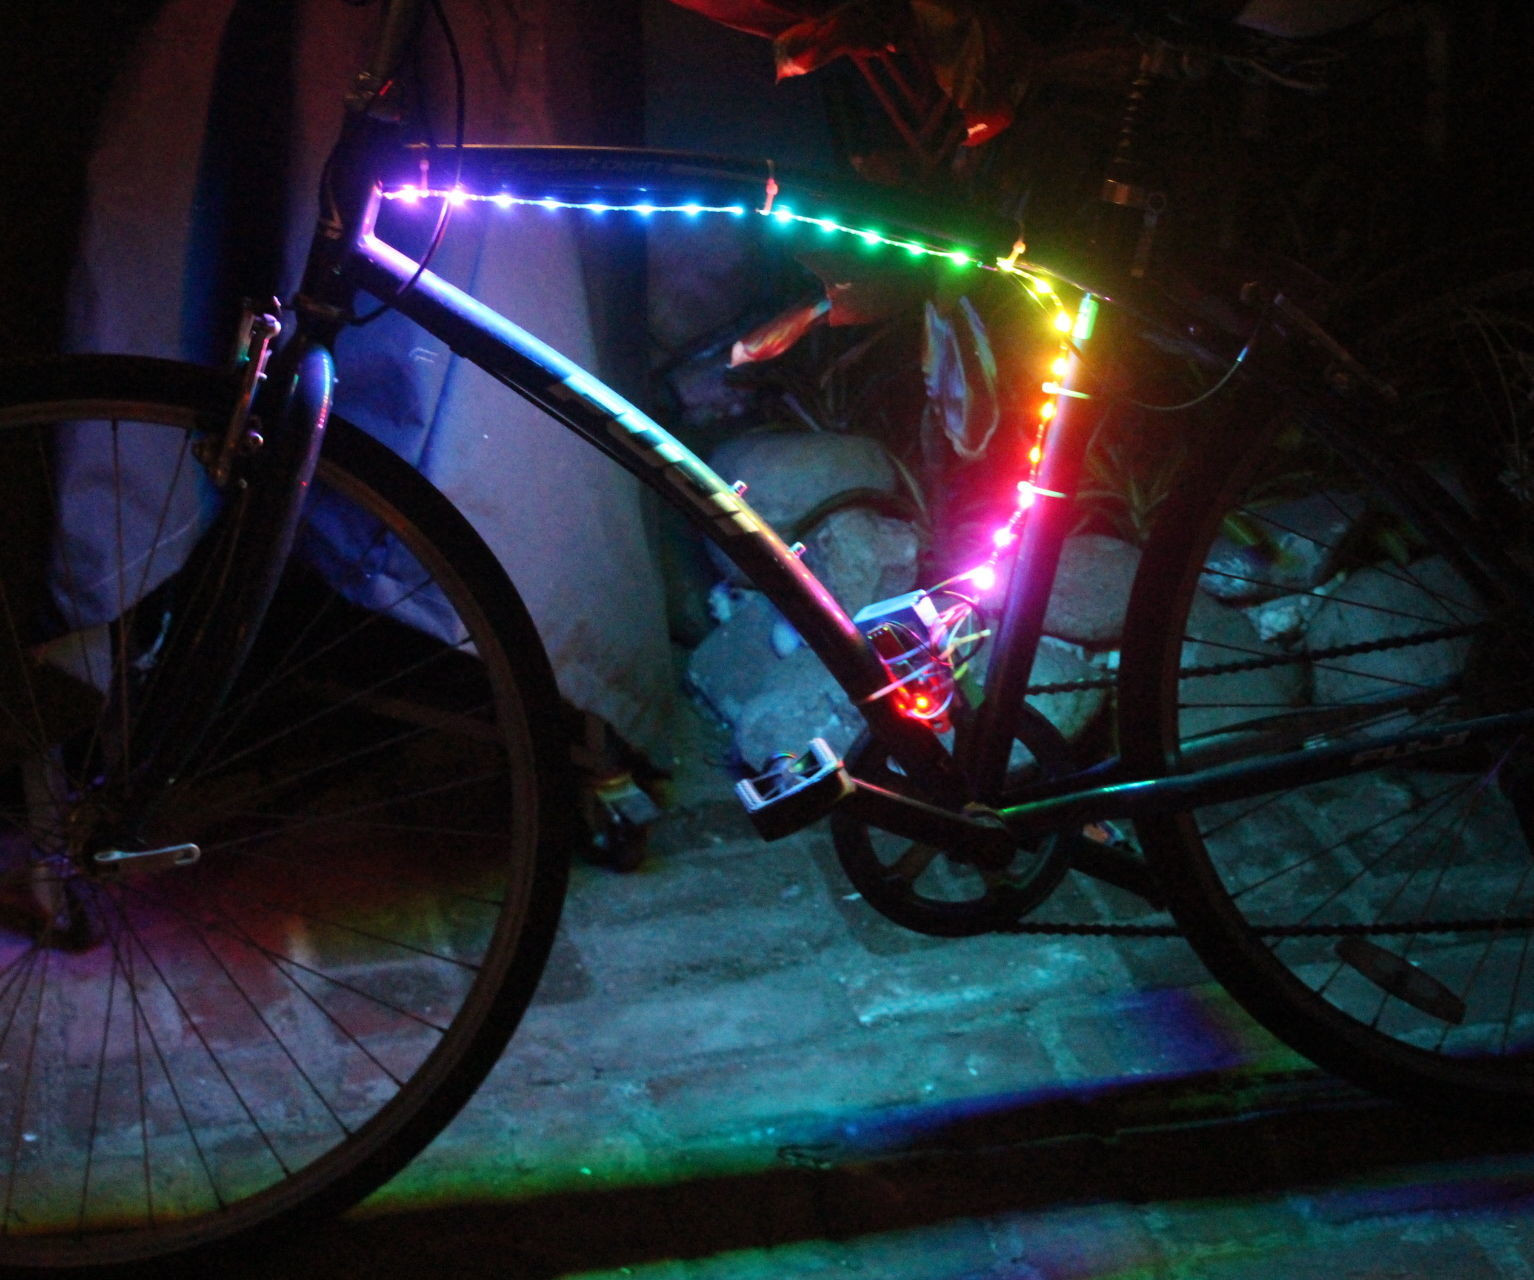 Best ideas about DIY Bike Lights
. Save or Pin DIY Bike LED Lights Now.